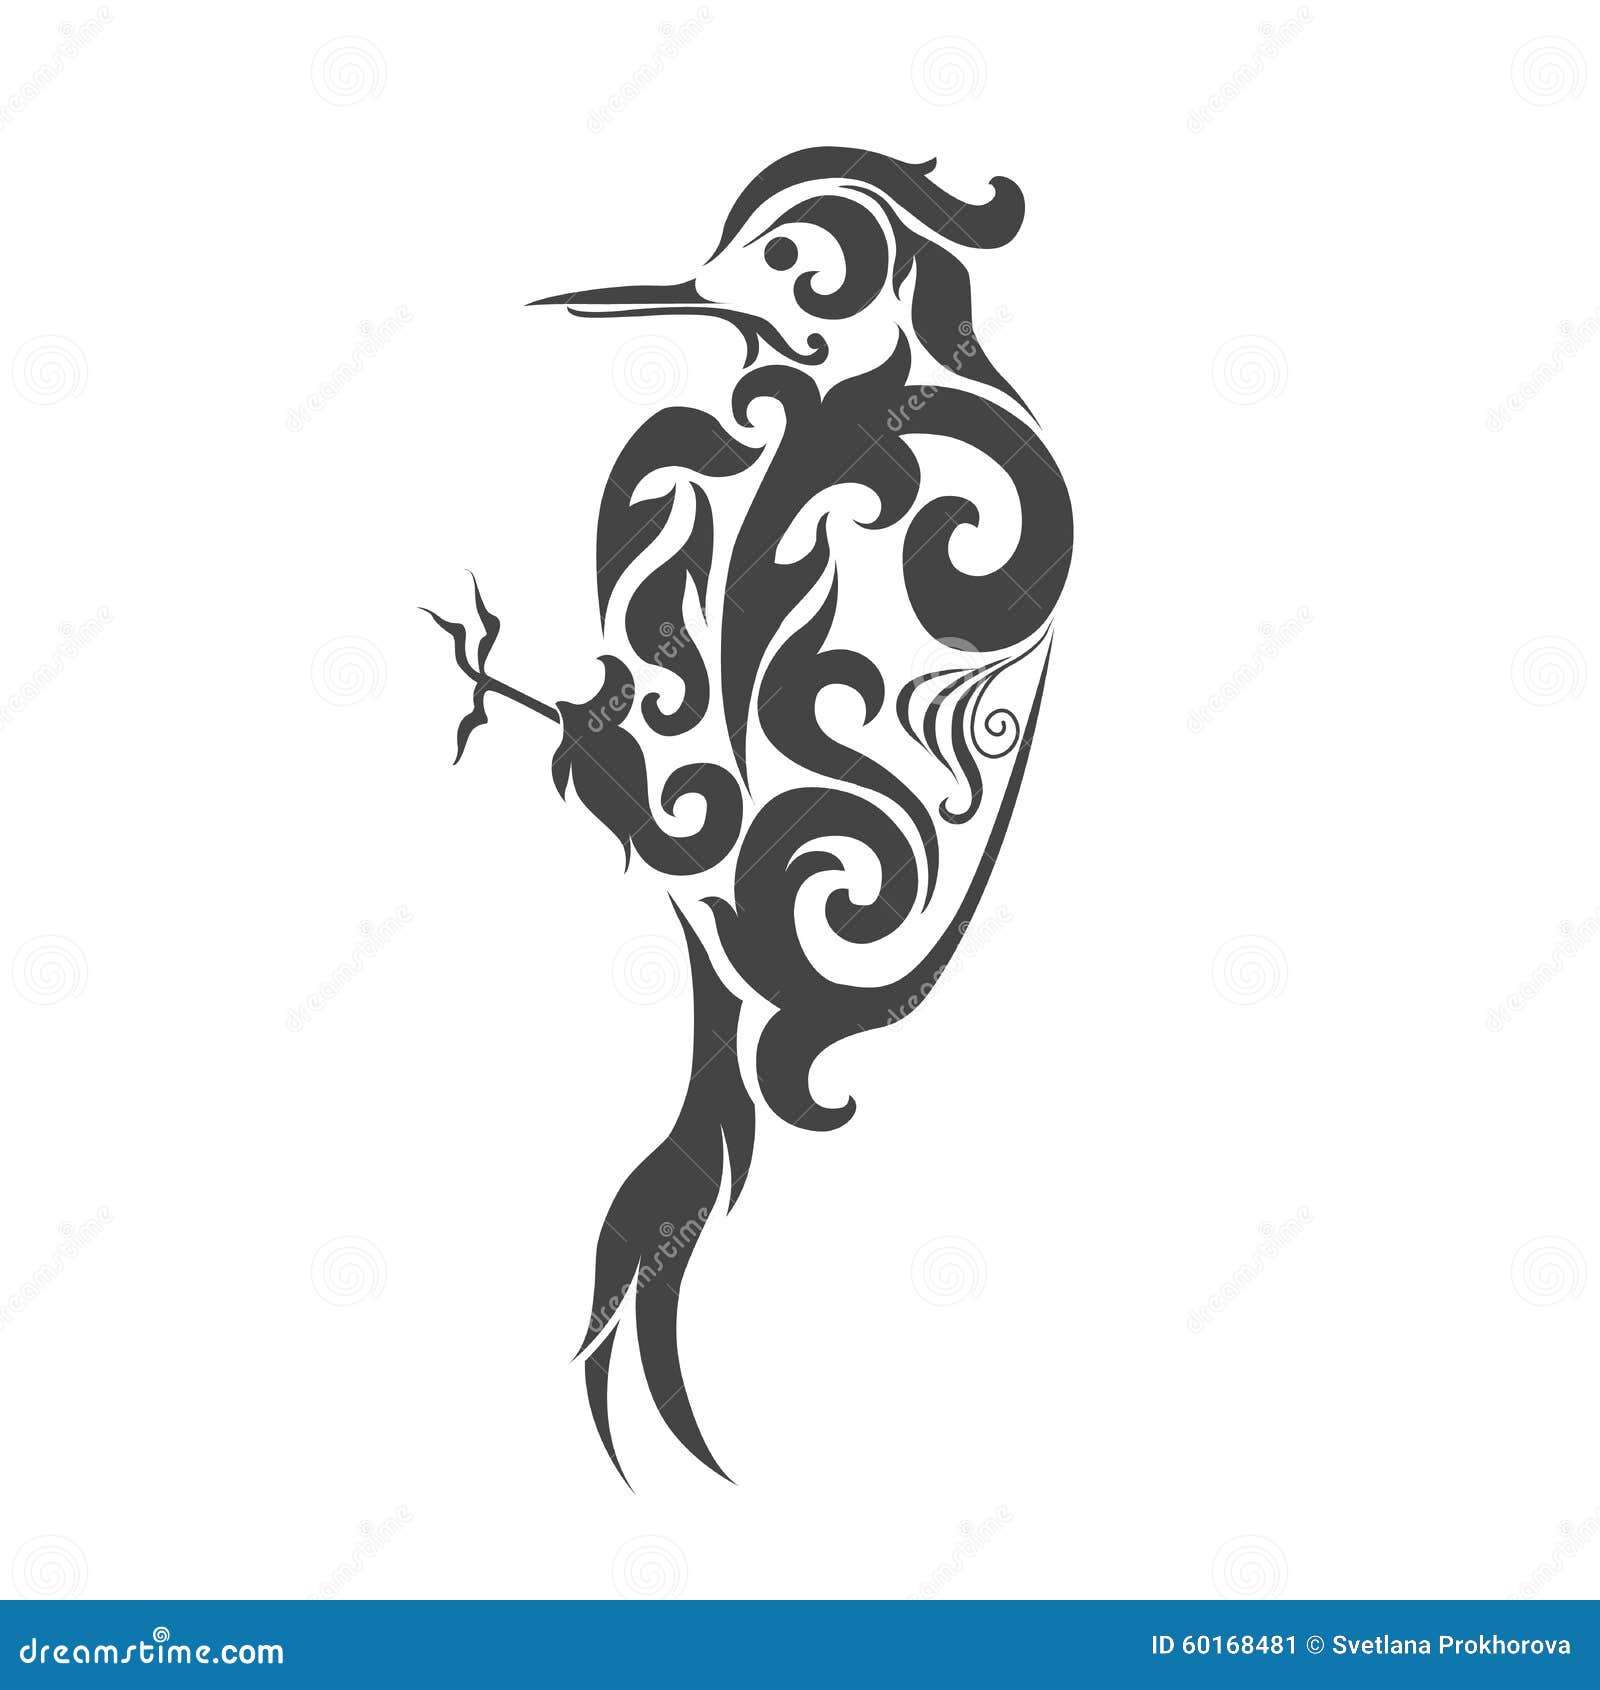 Tattoo bird design stock vector. Illustration of creative - 60168481